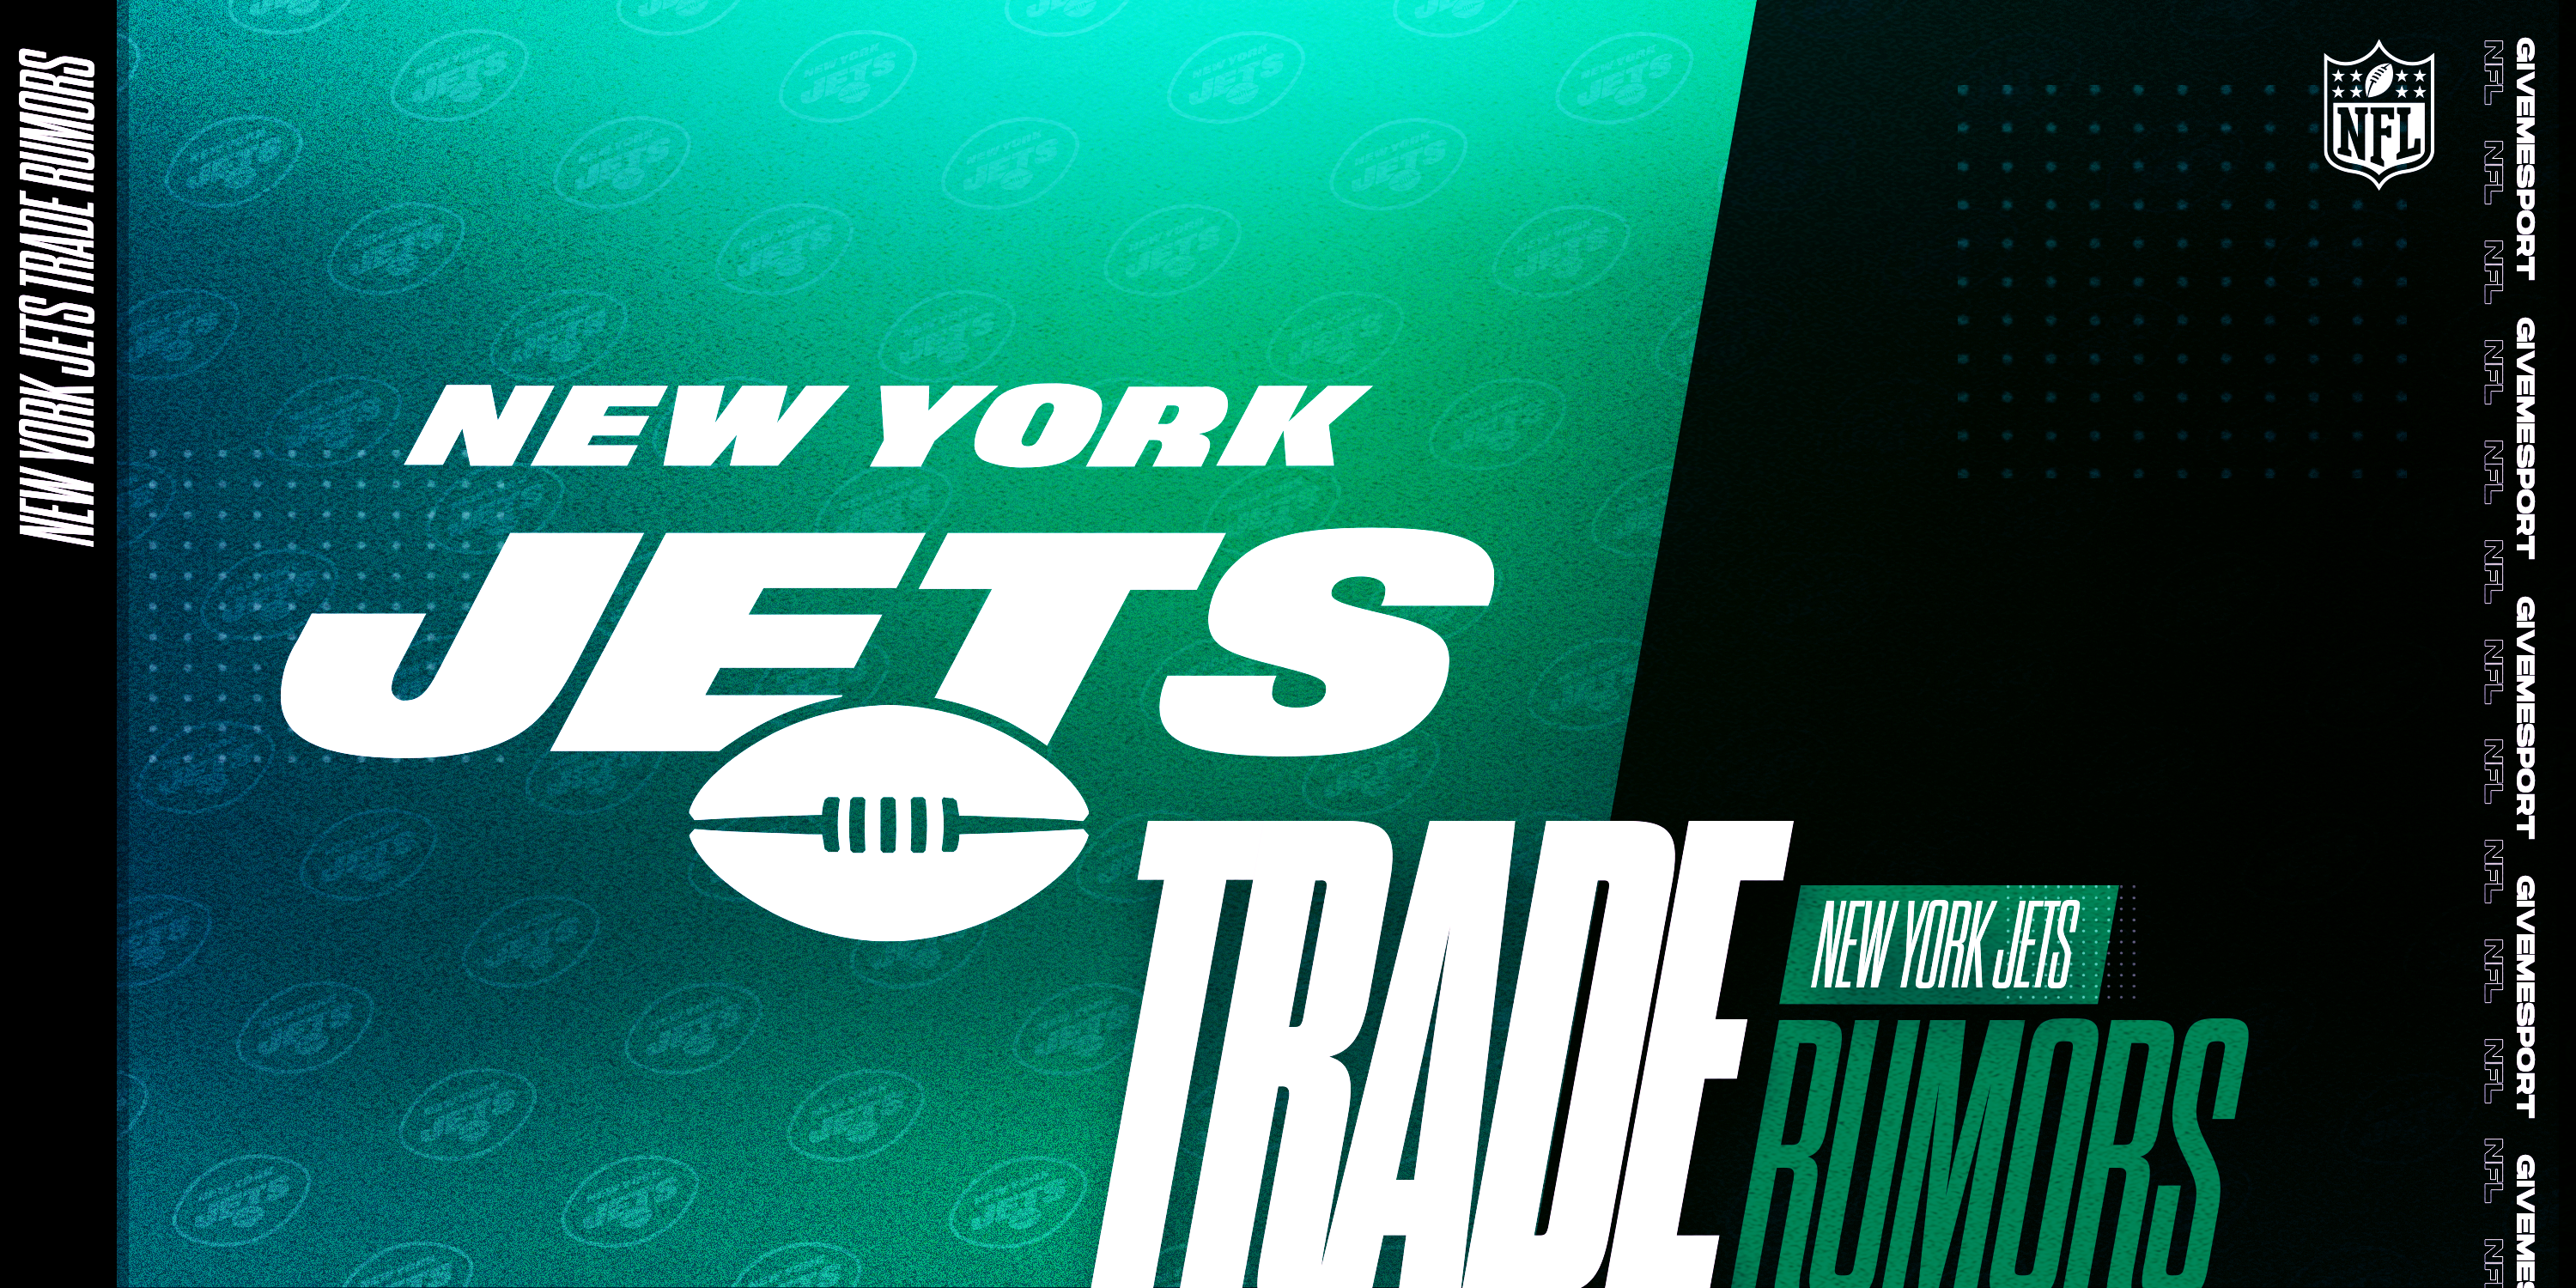 New York Jets Trade Rumors